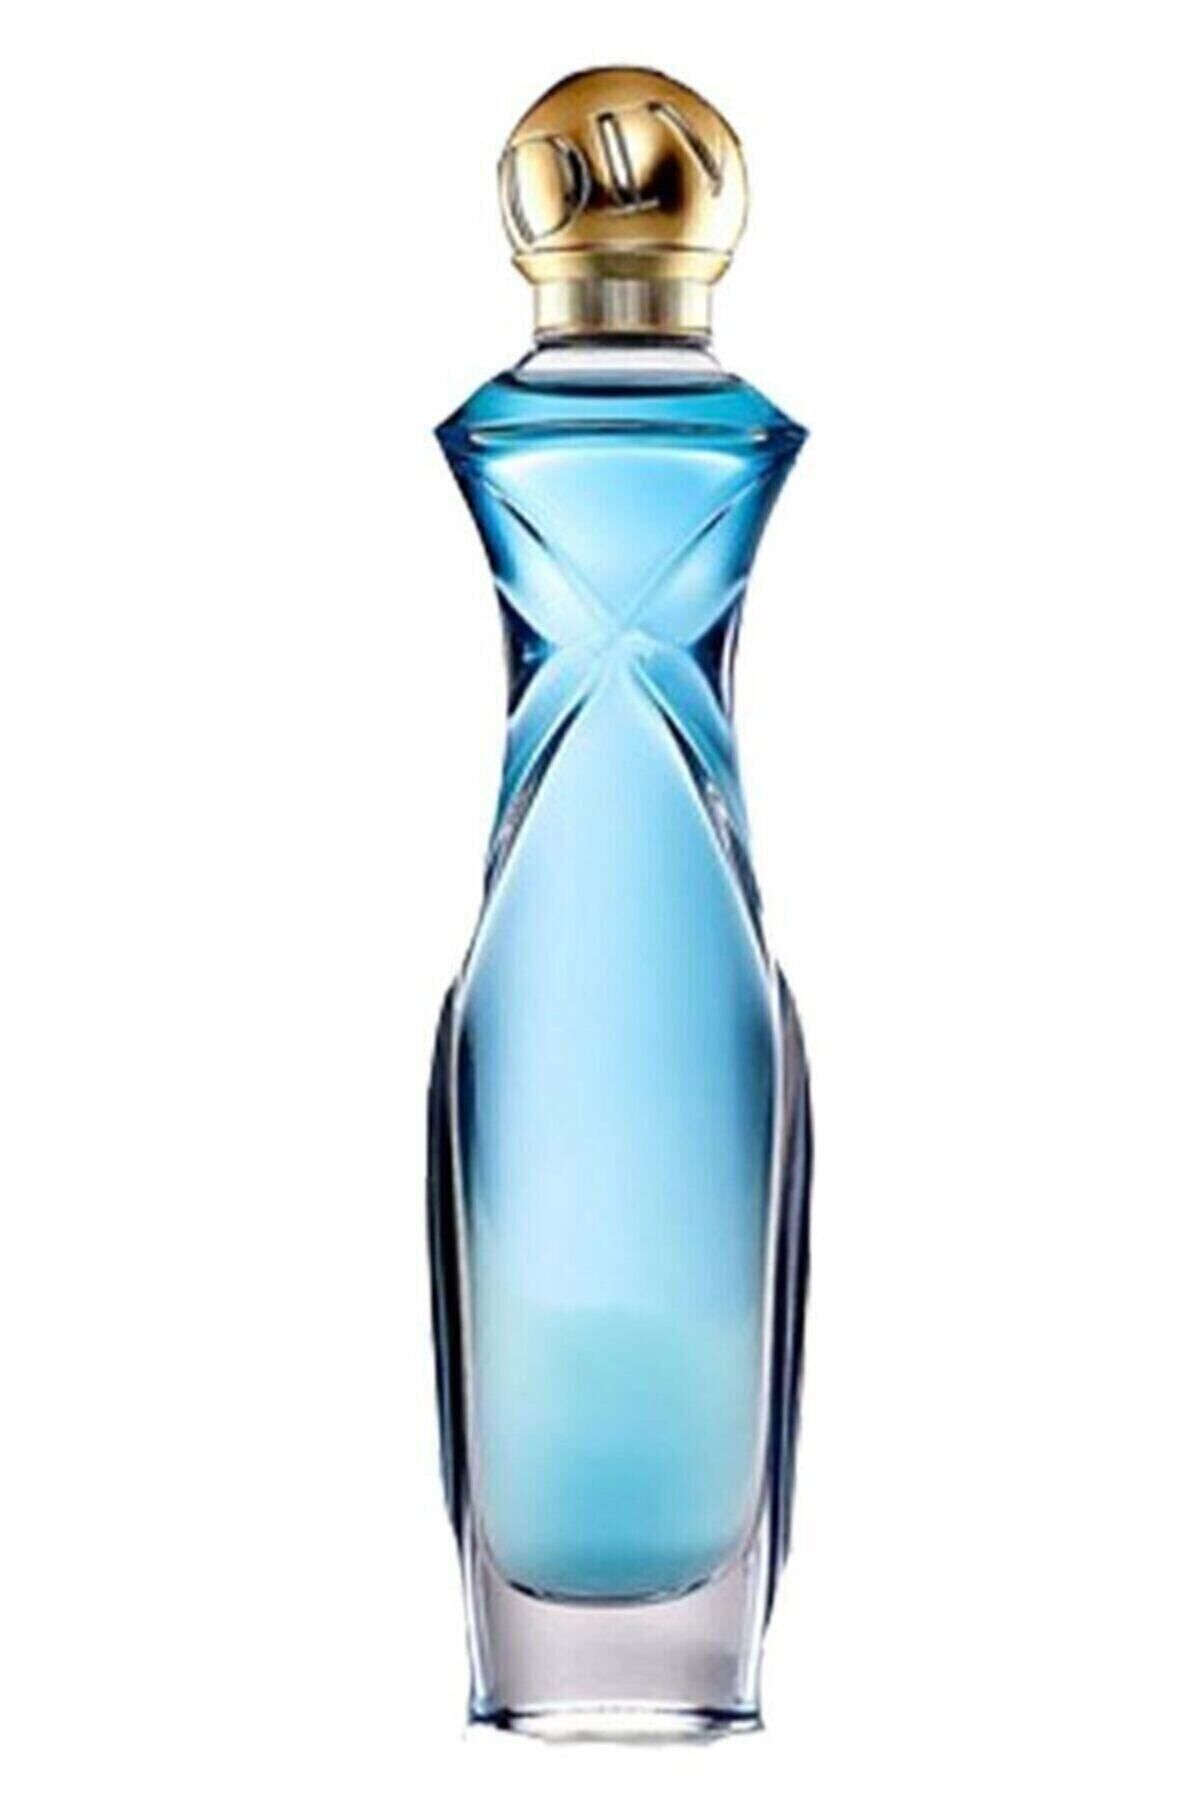 Oriflame عطر زنانه ۵۰ میلی لیتری با بوی الهام بخش